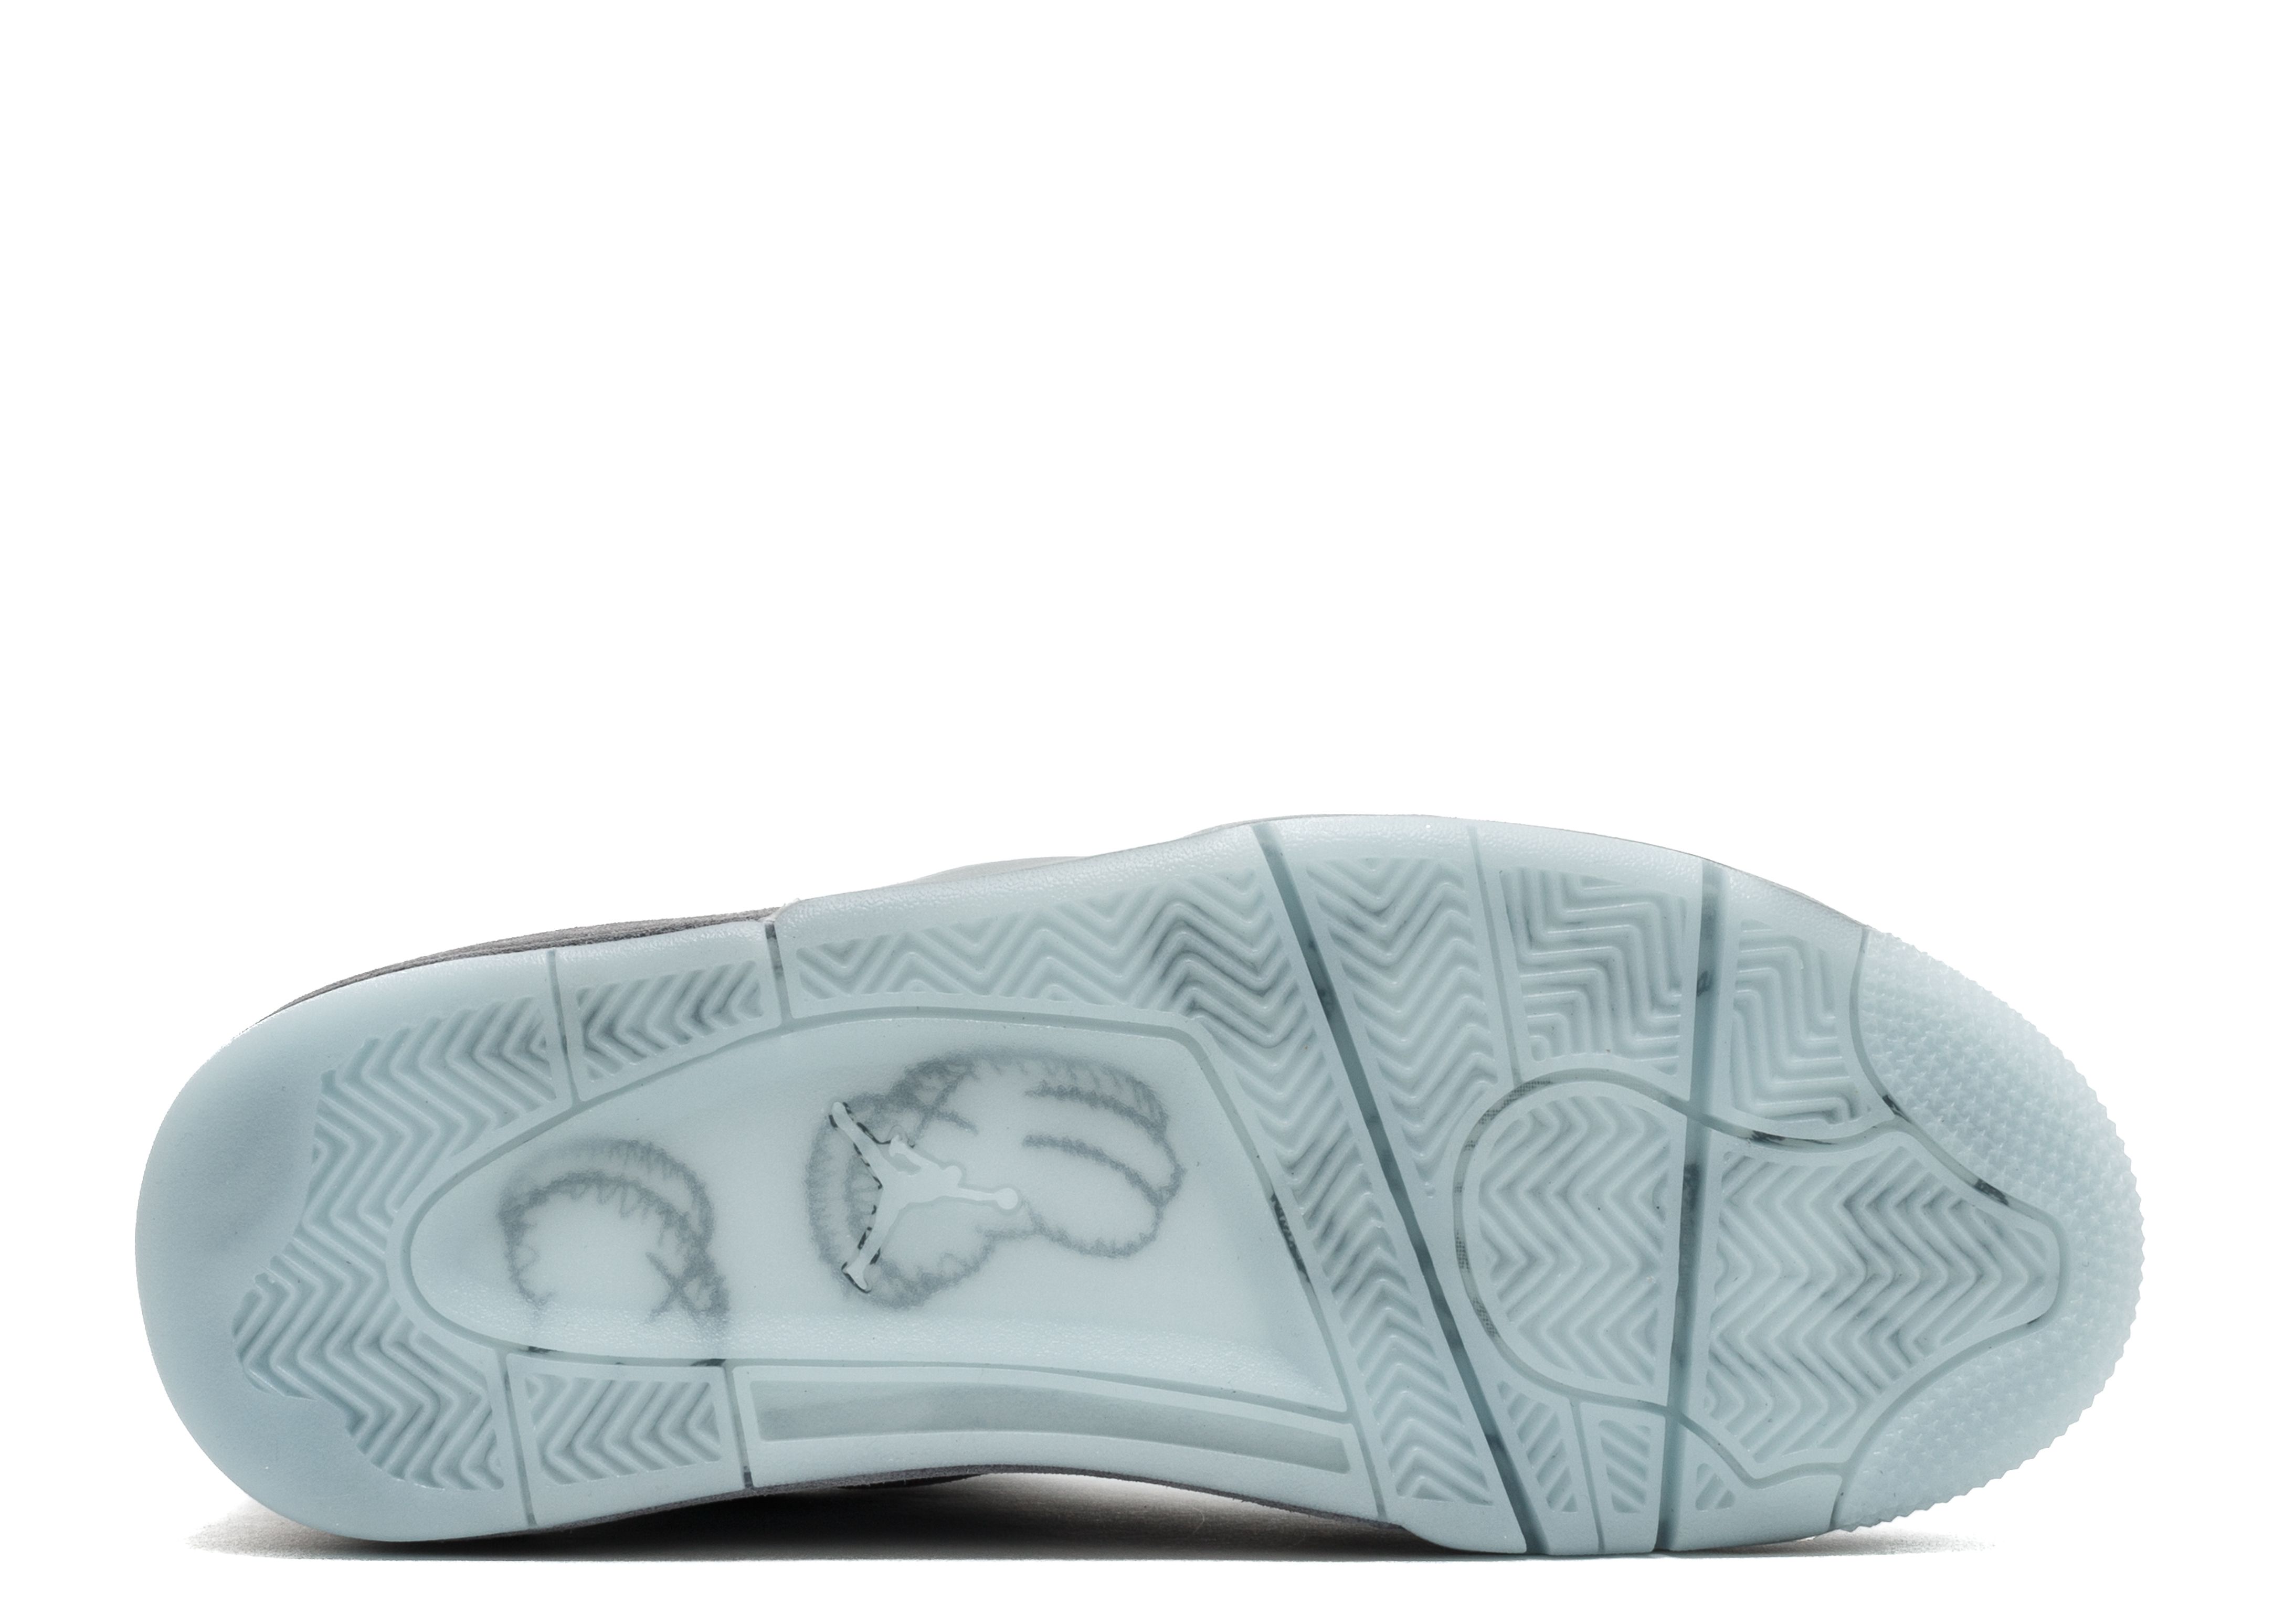 Phobia Bedøvelsesmiddel januar KAWS X Air Jordan 4 Retro 'Cool Grey' - Air Jordan - 930155 003 - cool grey/white  | Flight Club